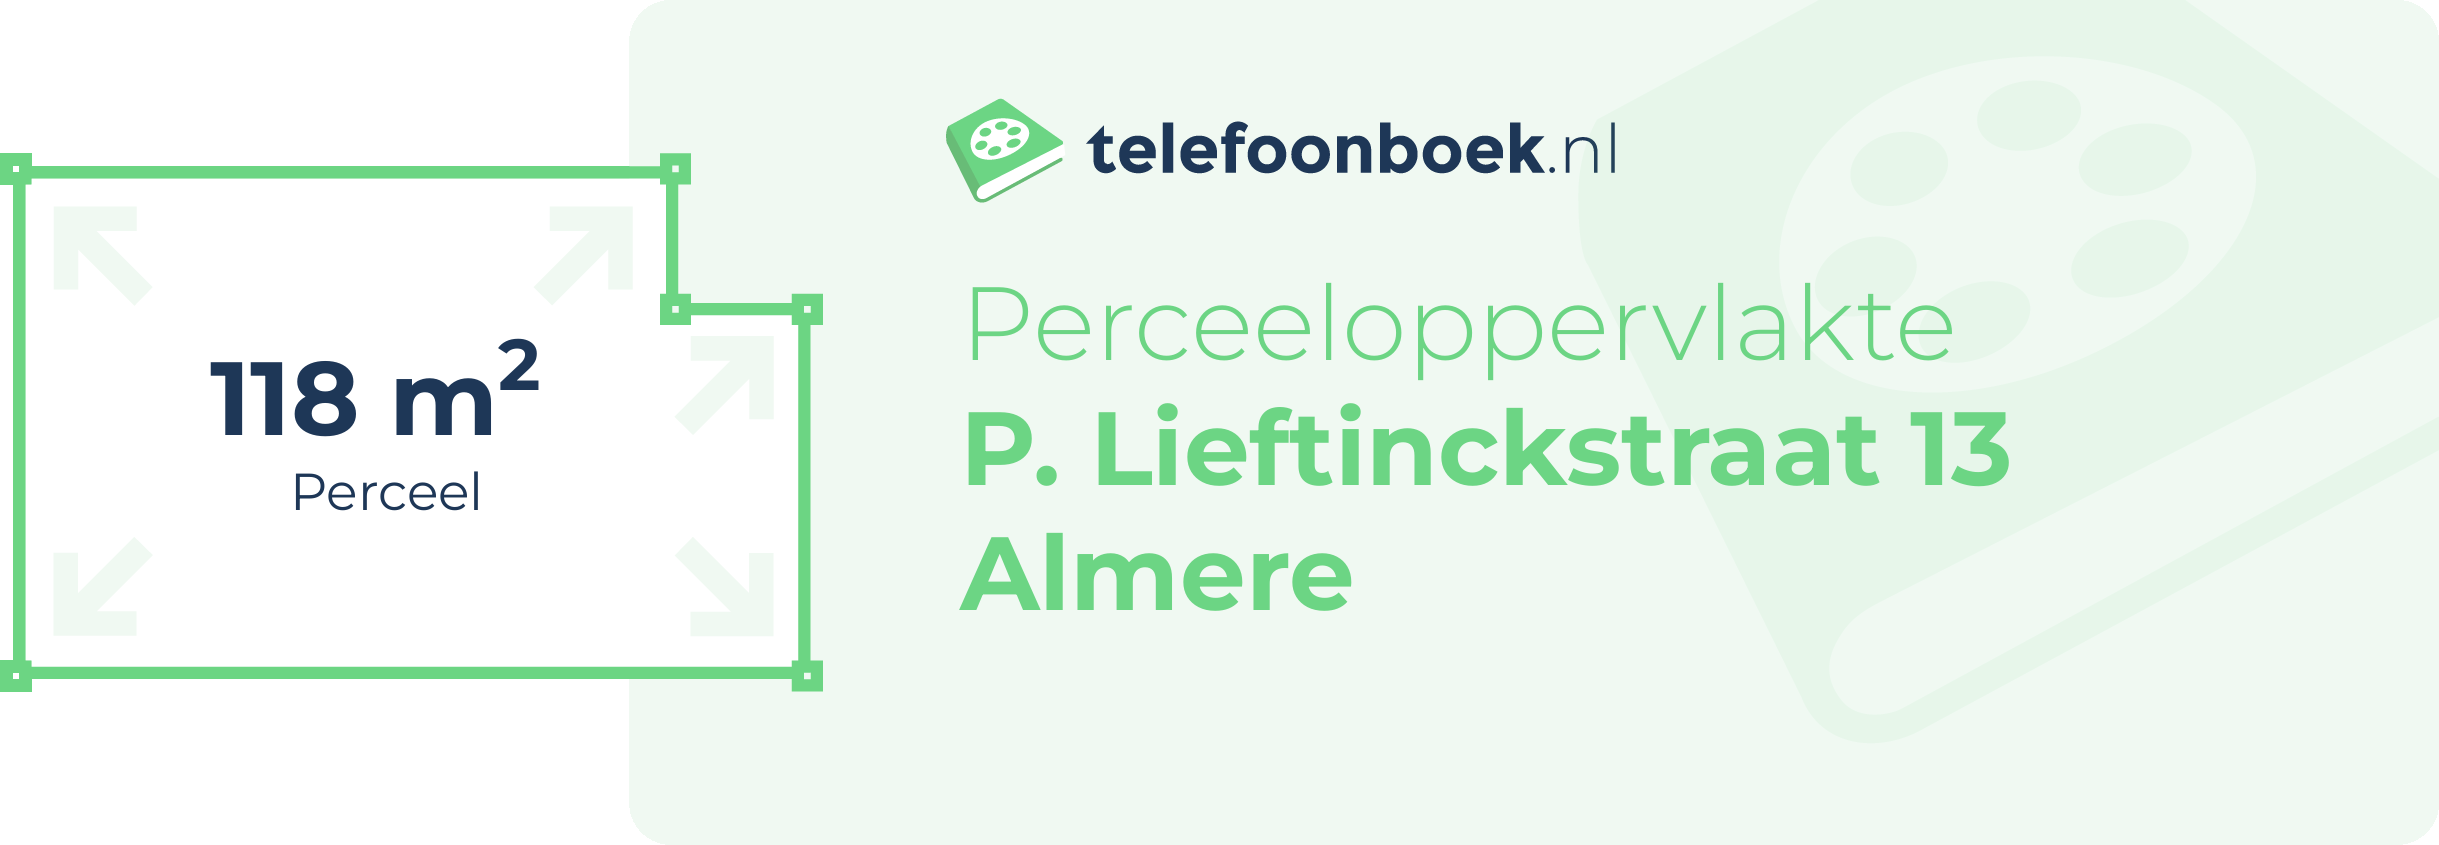 Perceeloppervlakte P. Lieftinckstraat 13 Almere